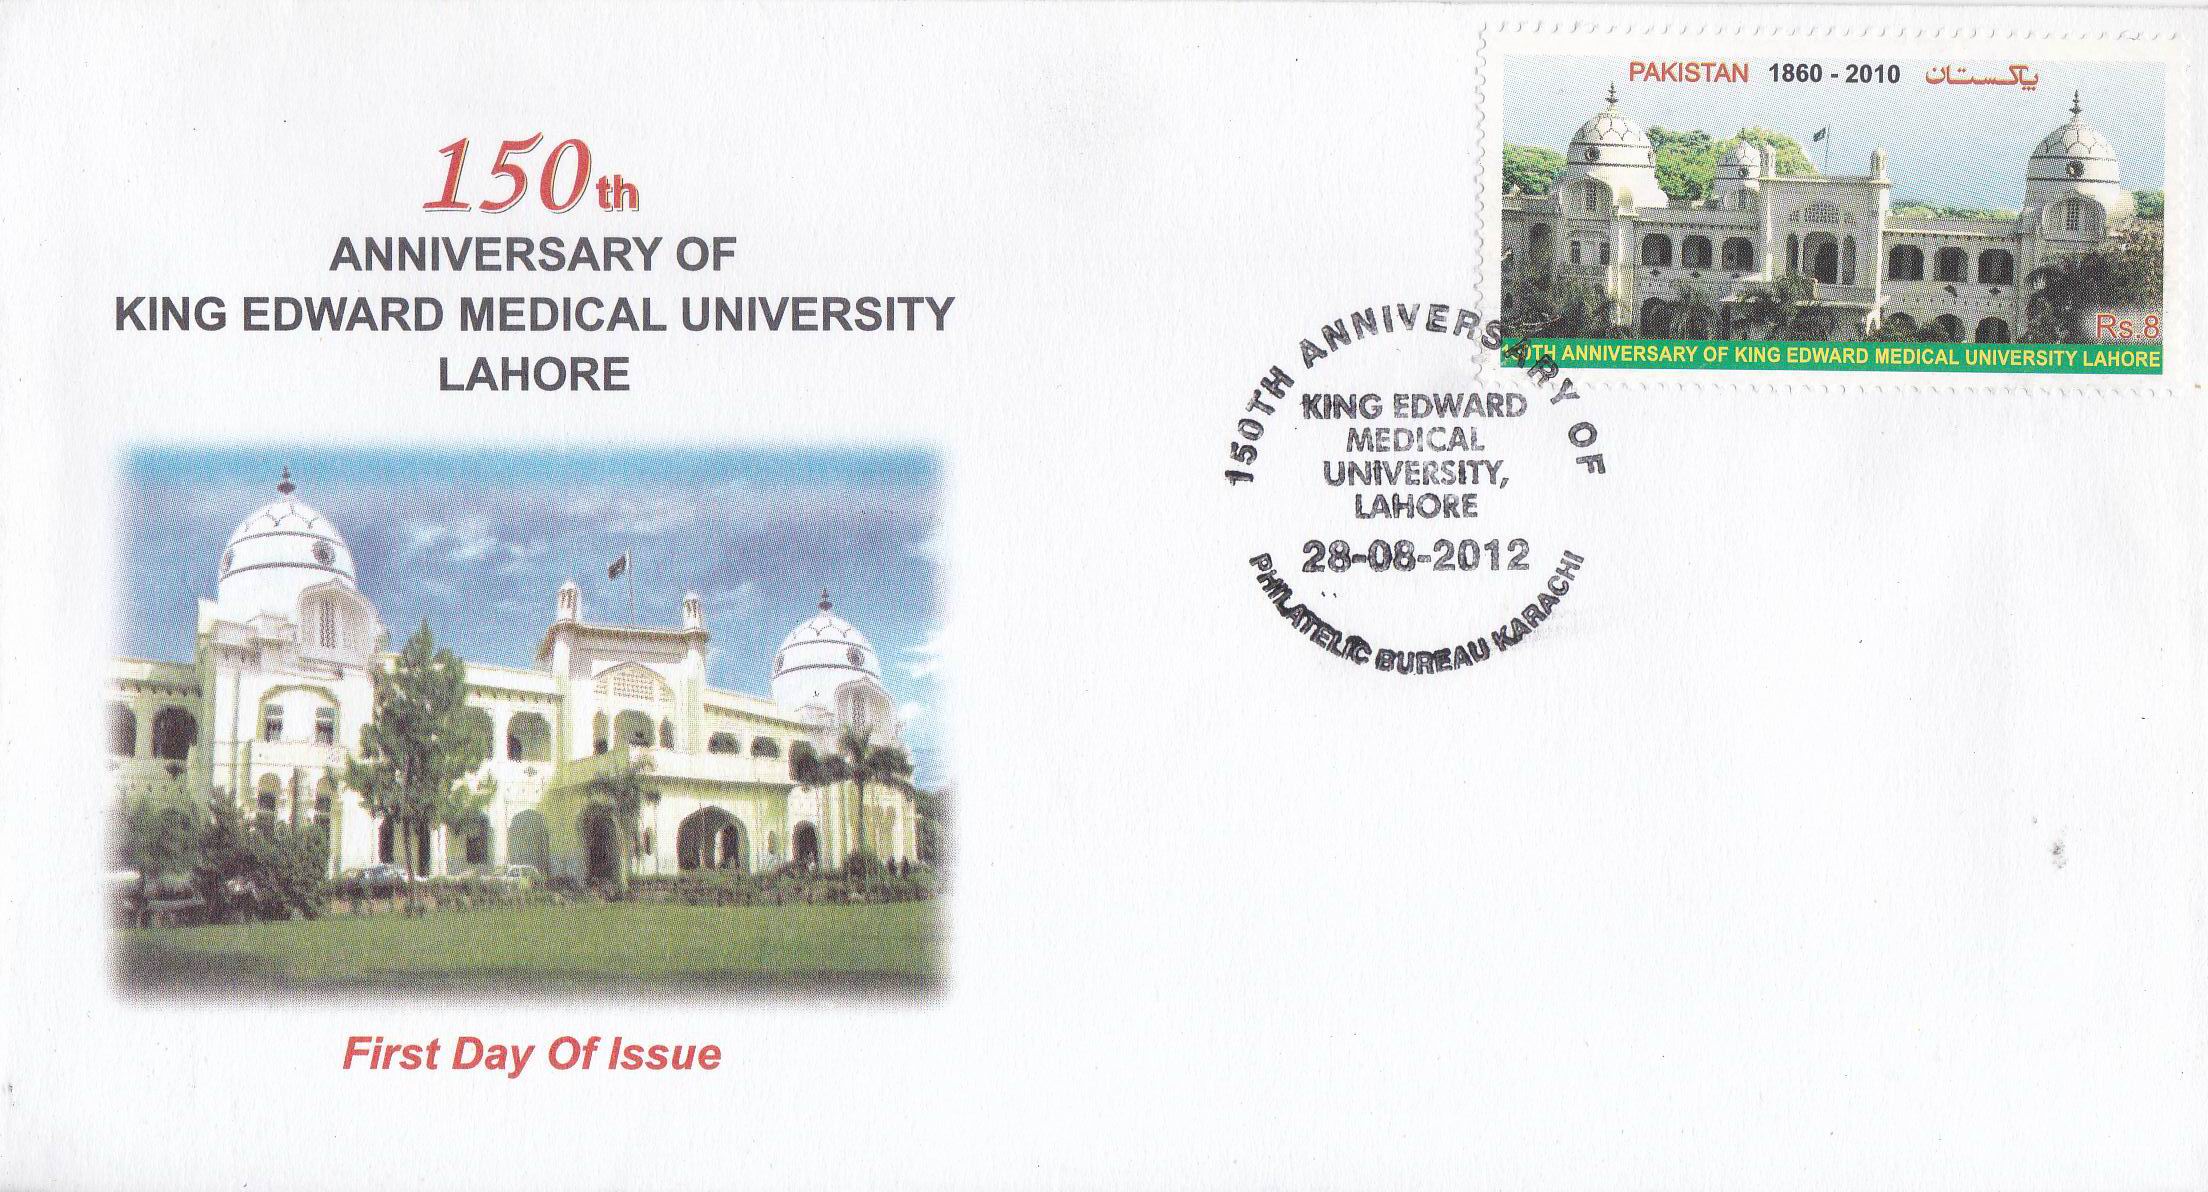 Pakistan Fdc 2012 King Edward Medical University Lahore